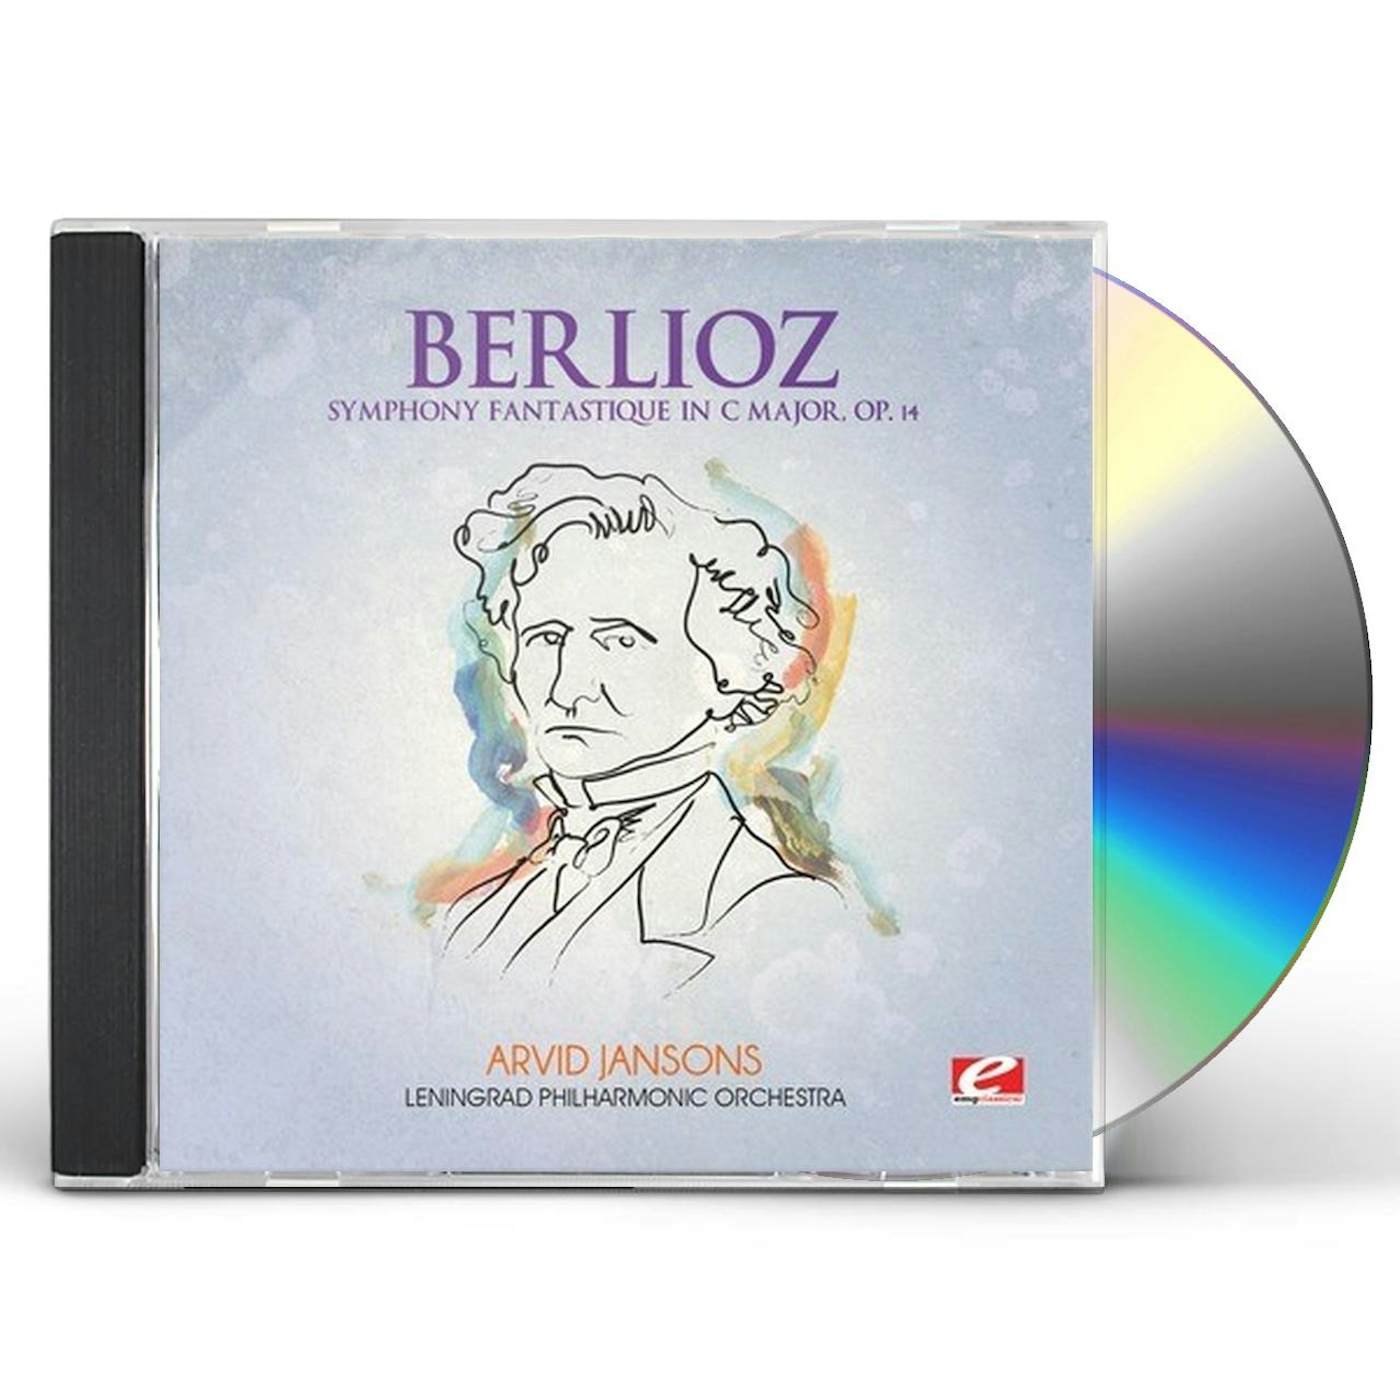 Berlioz SYMPHONY FANTASTIQUE IN C MAJOR CD